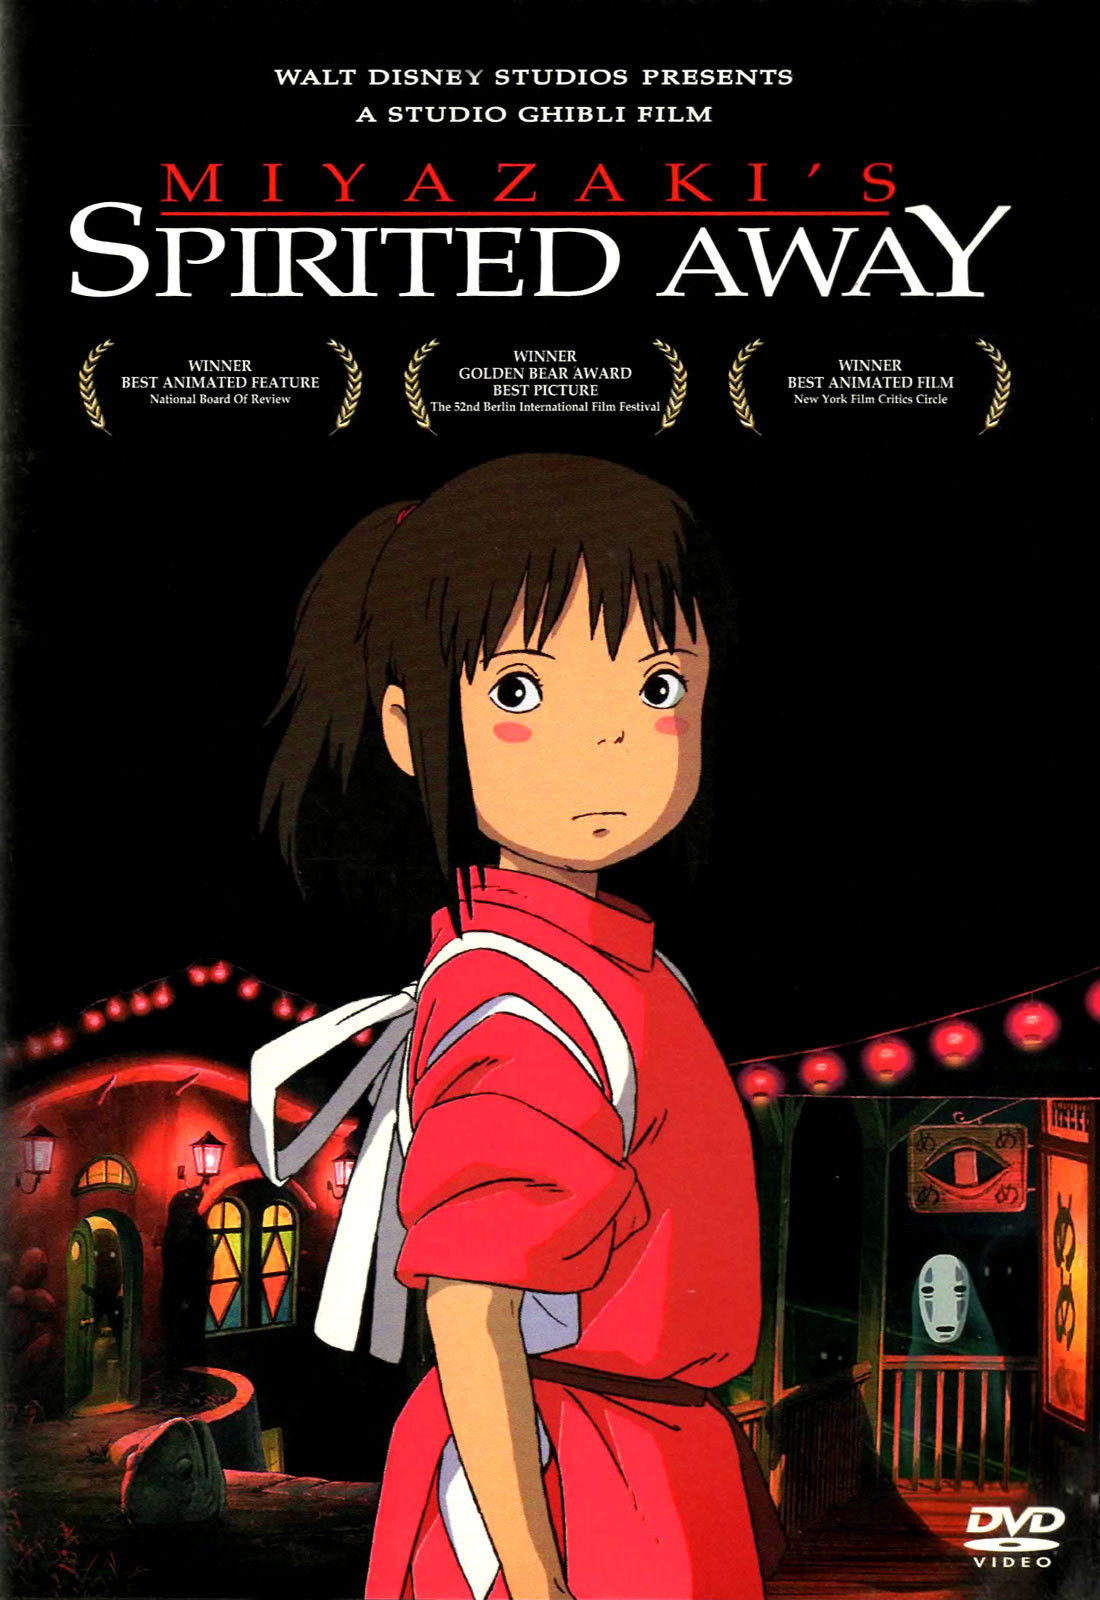 Spirited Movie Review